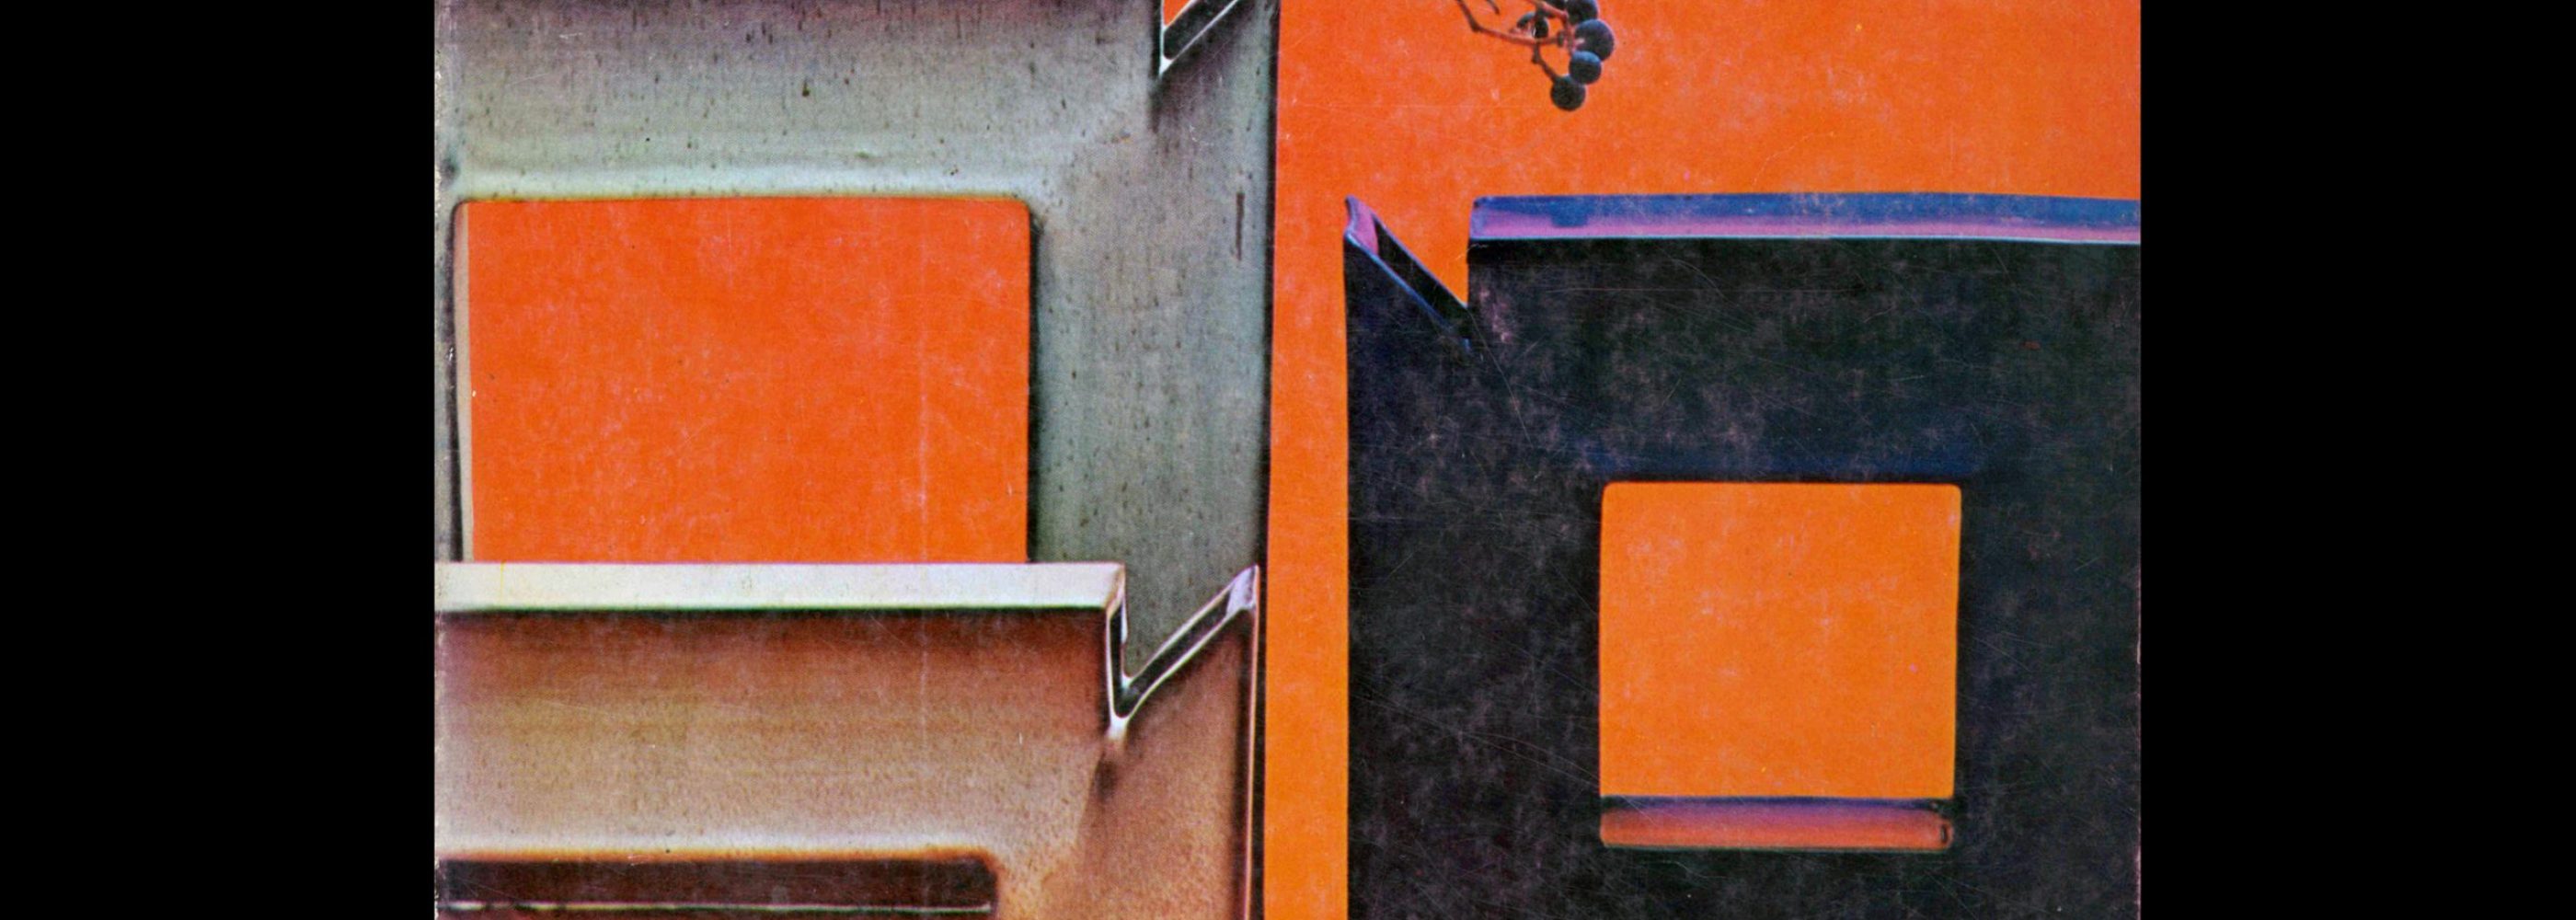 Ottagono 12, 1969. Design by Bob Noorda / Unimark